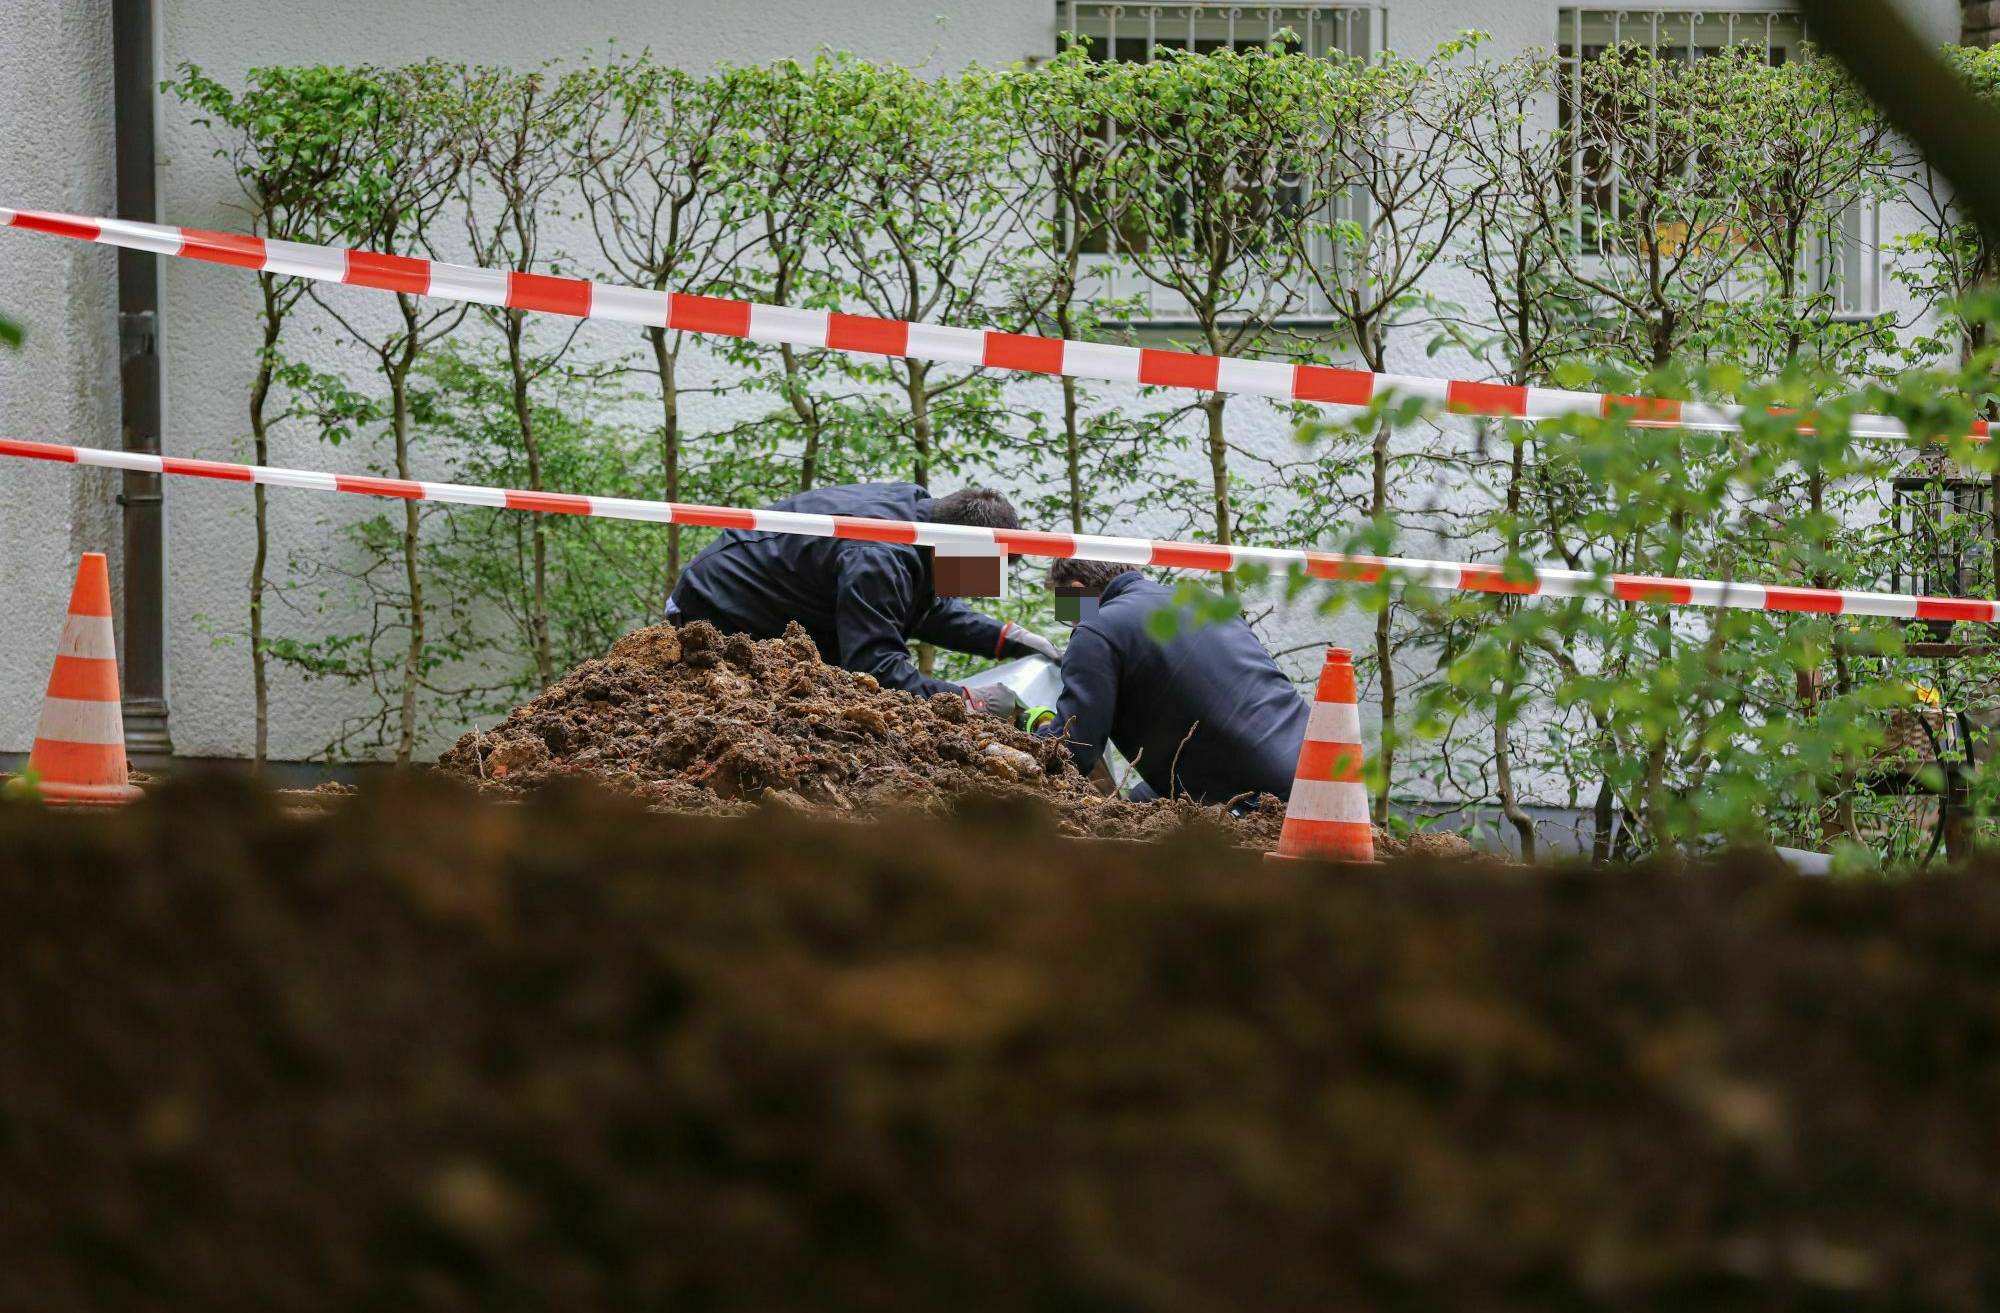 Bombe in Wuppertaler Garten entdeckt